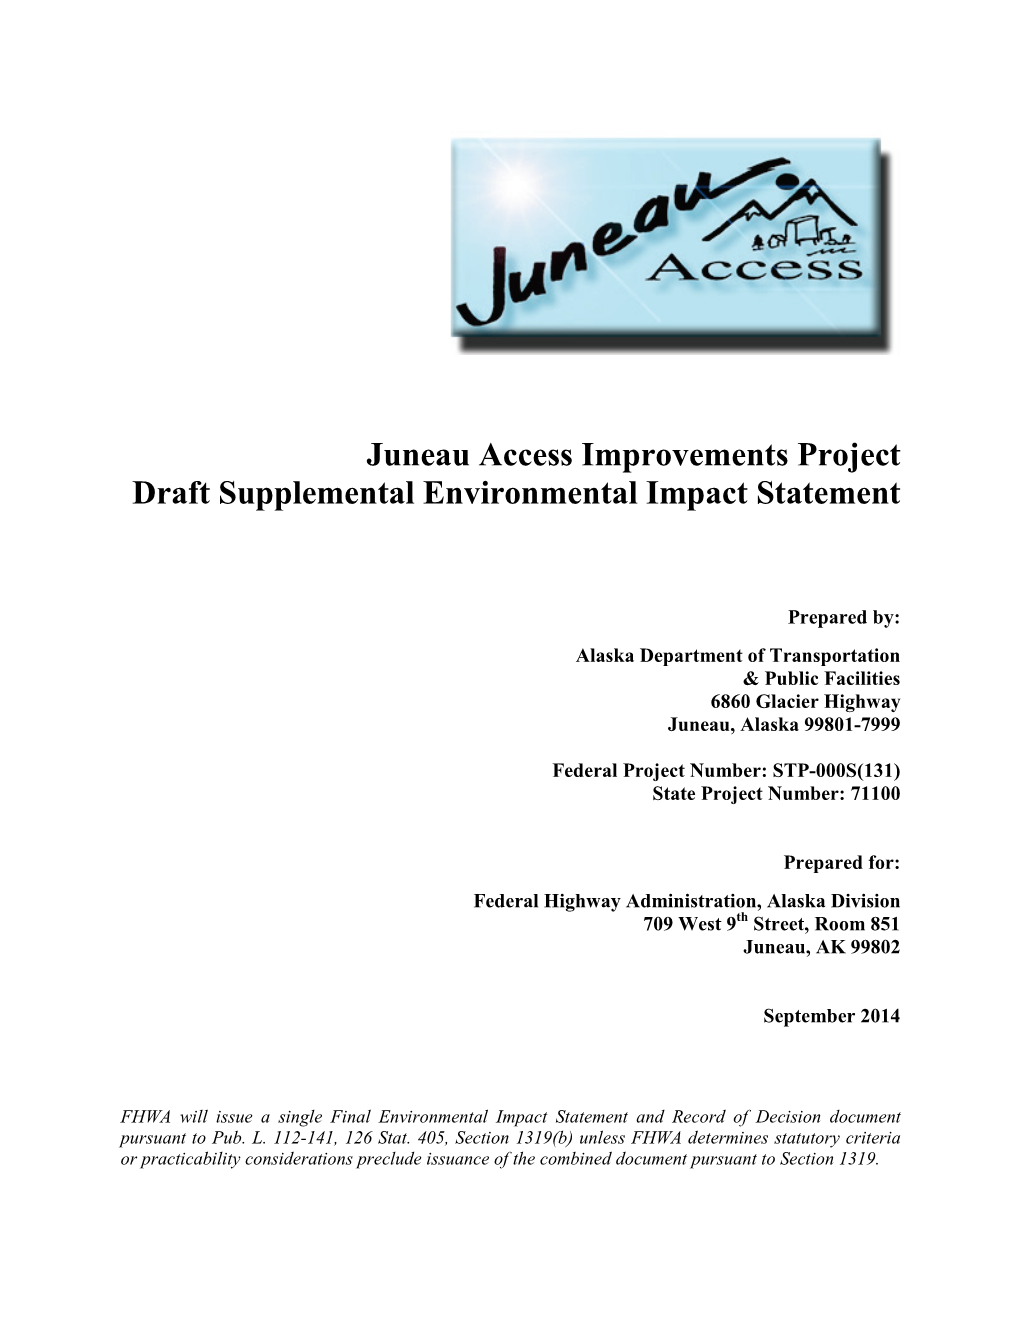 Juneau Access Improvements Project Draft Supplemental Environmental Impact Statement